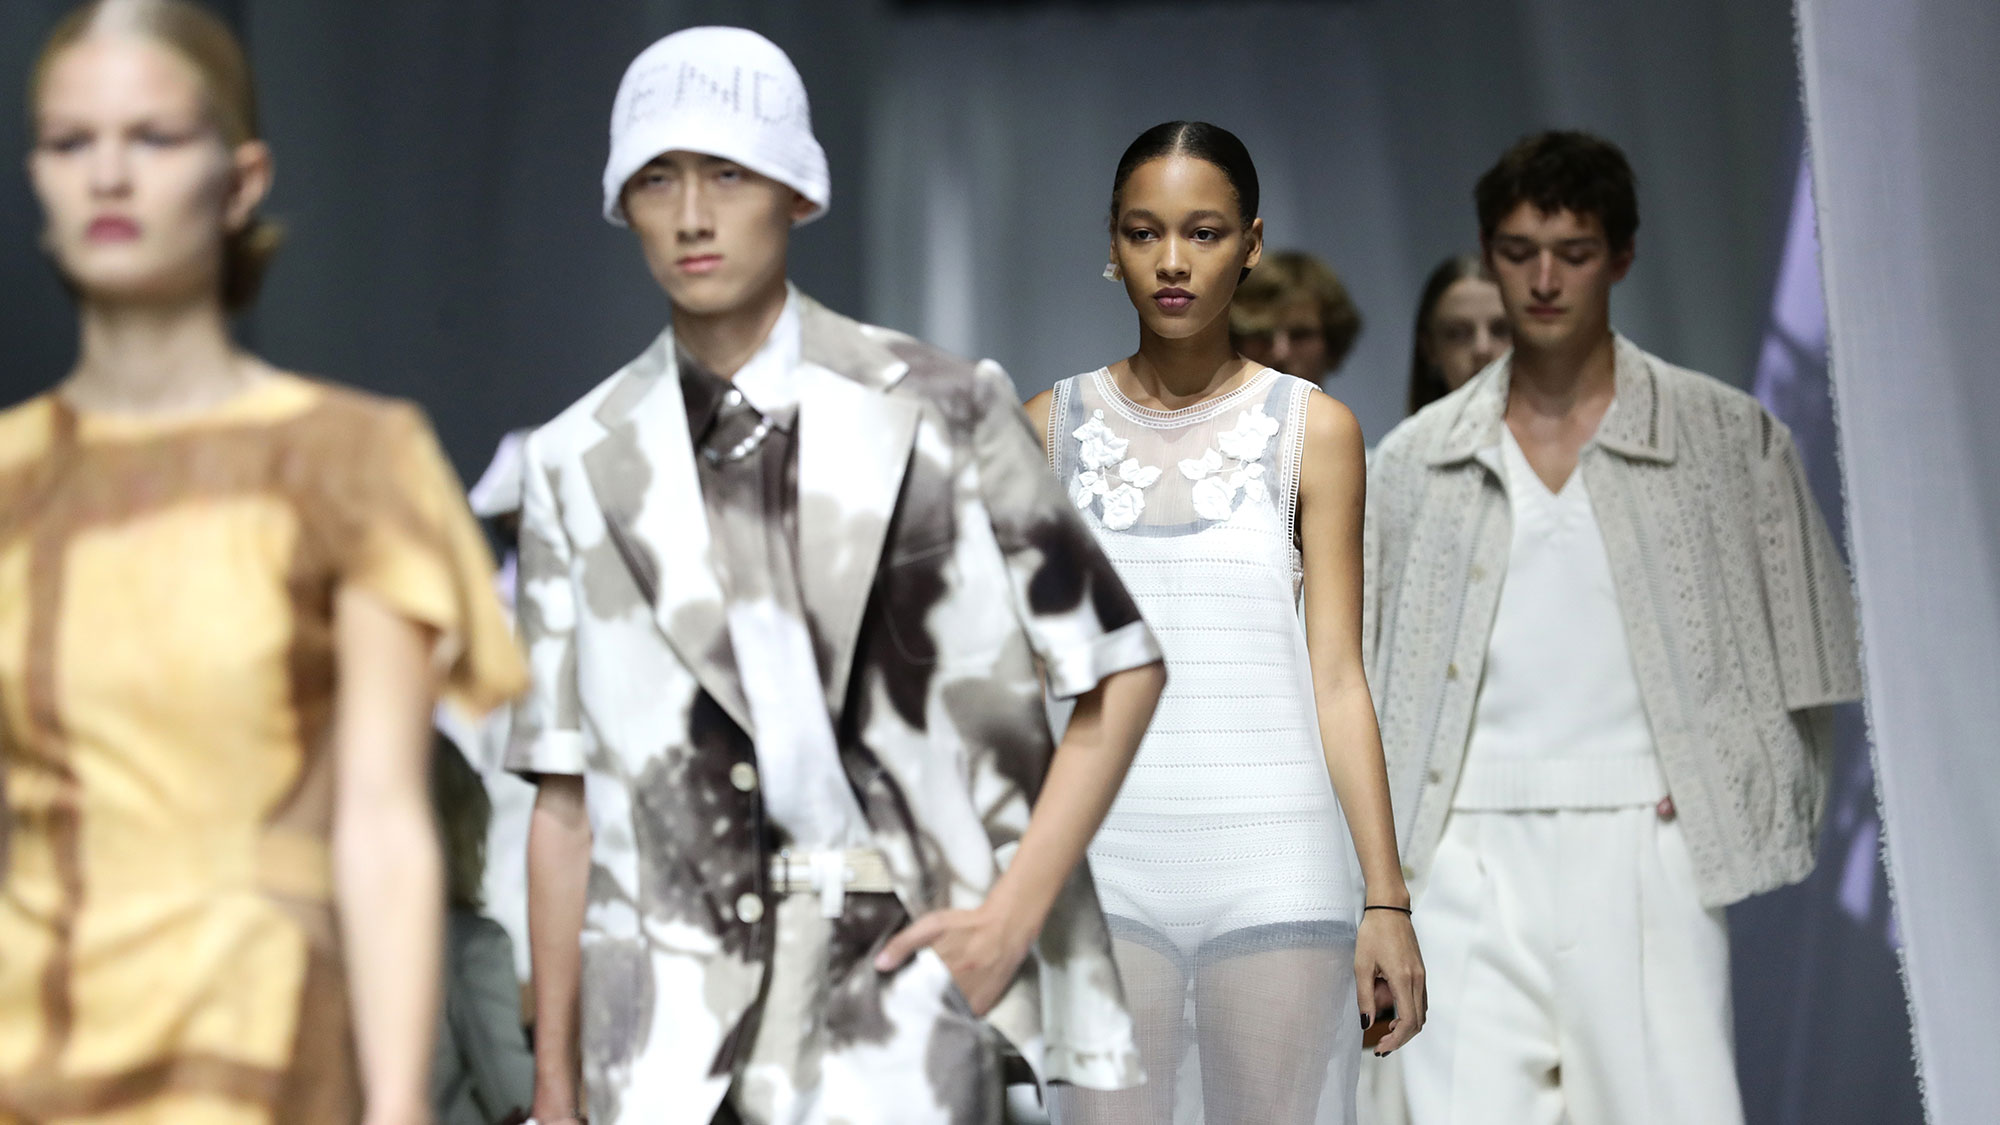 Milan Fashion Week proves even a pandemic can’t stop fashion